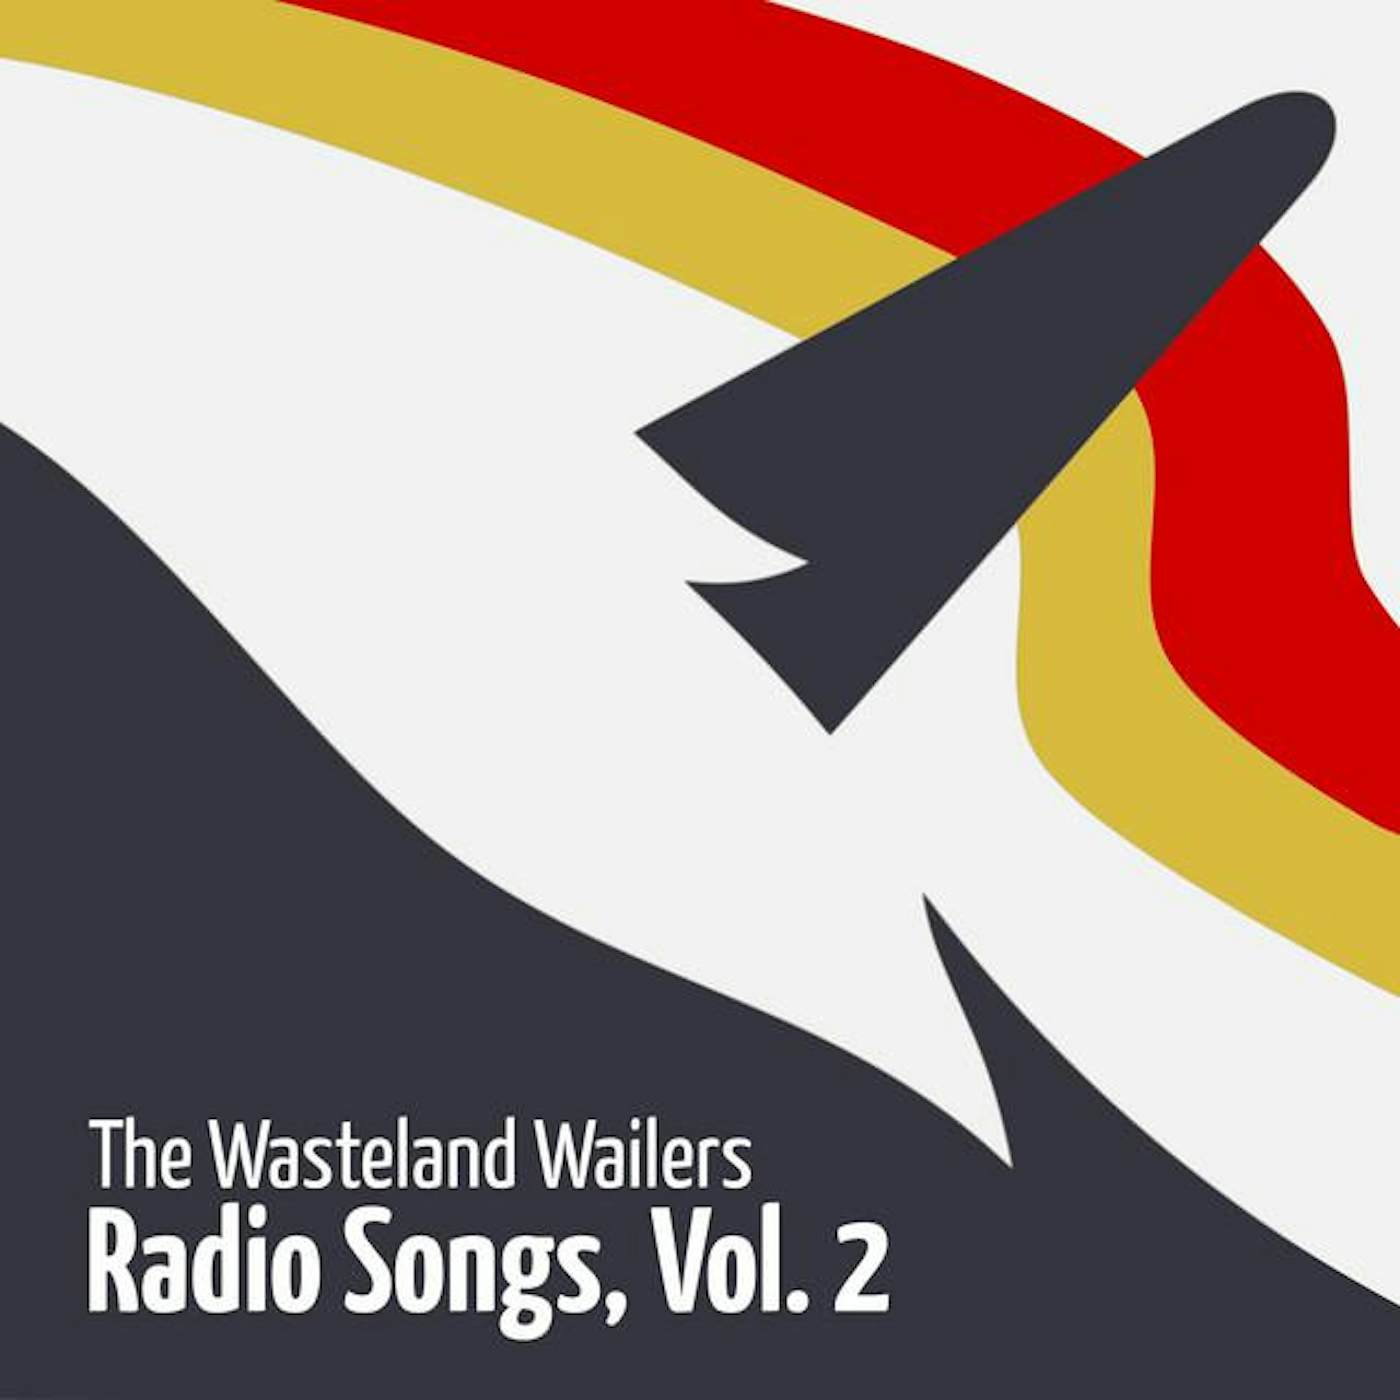 The Wasteland Wailers